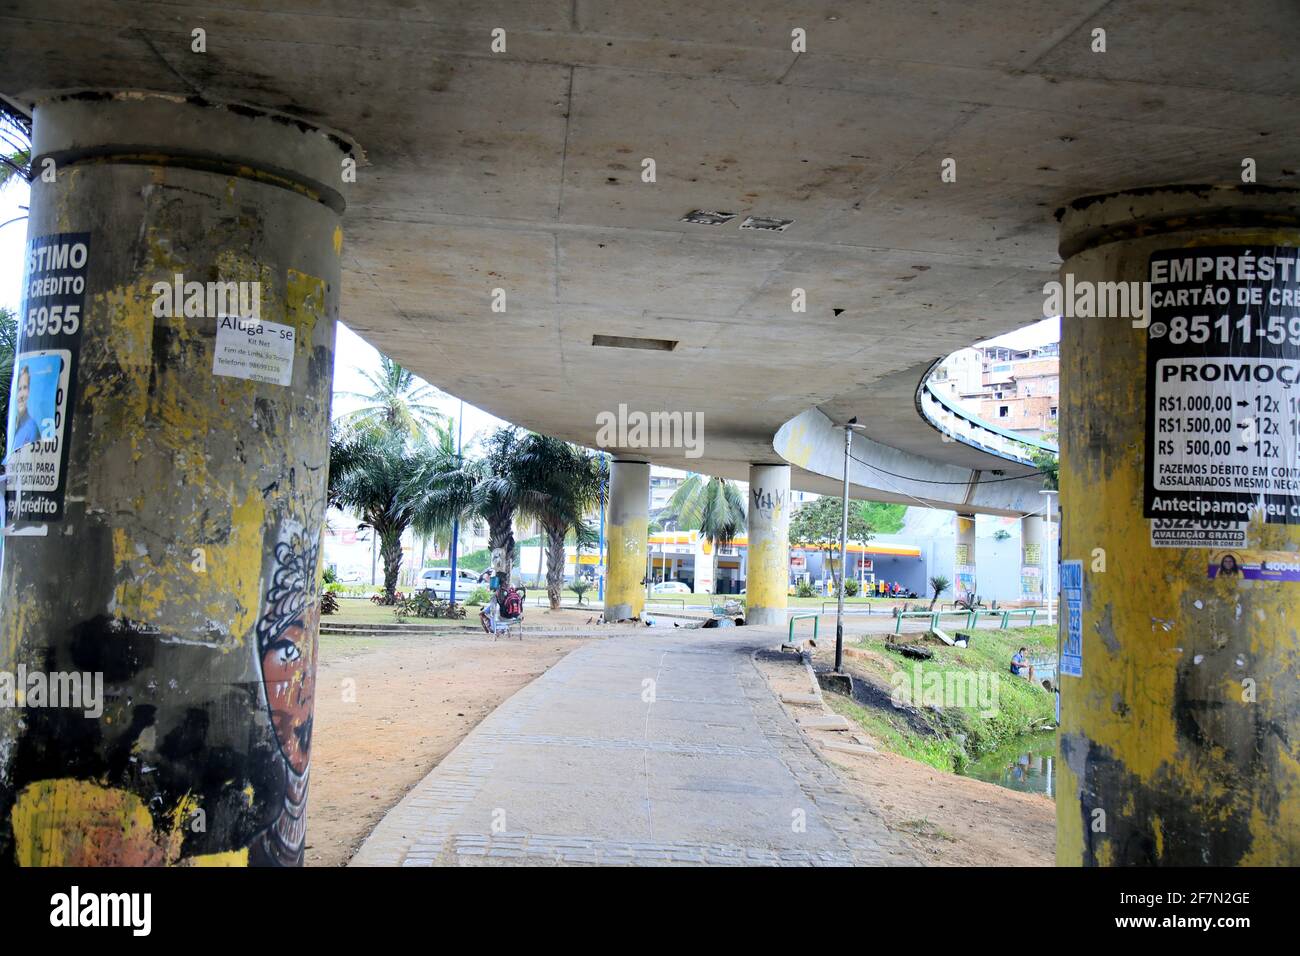 salvador, bahia brazil - december 4, 2020: view of the Romulo Almeiado viaducts at Dique de Tororo in the city of Salvador. Stock Photo